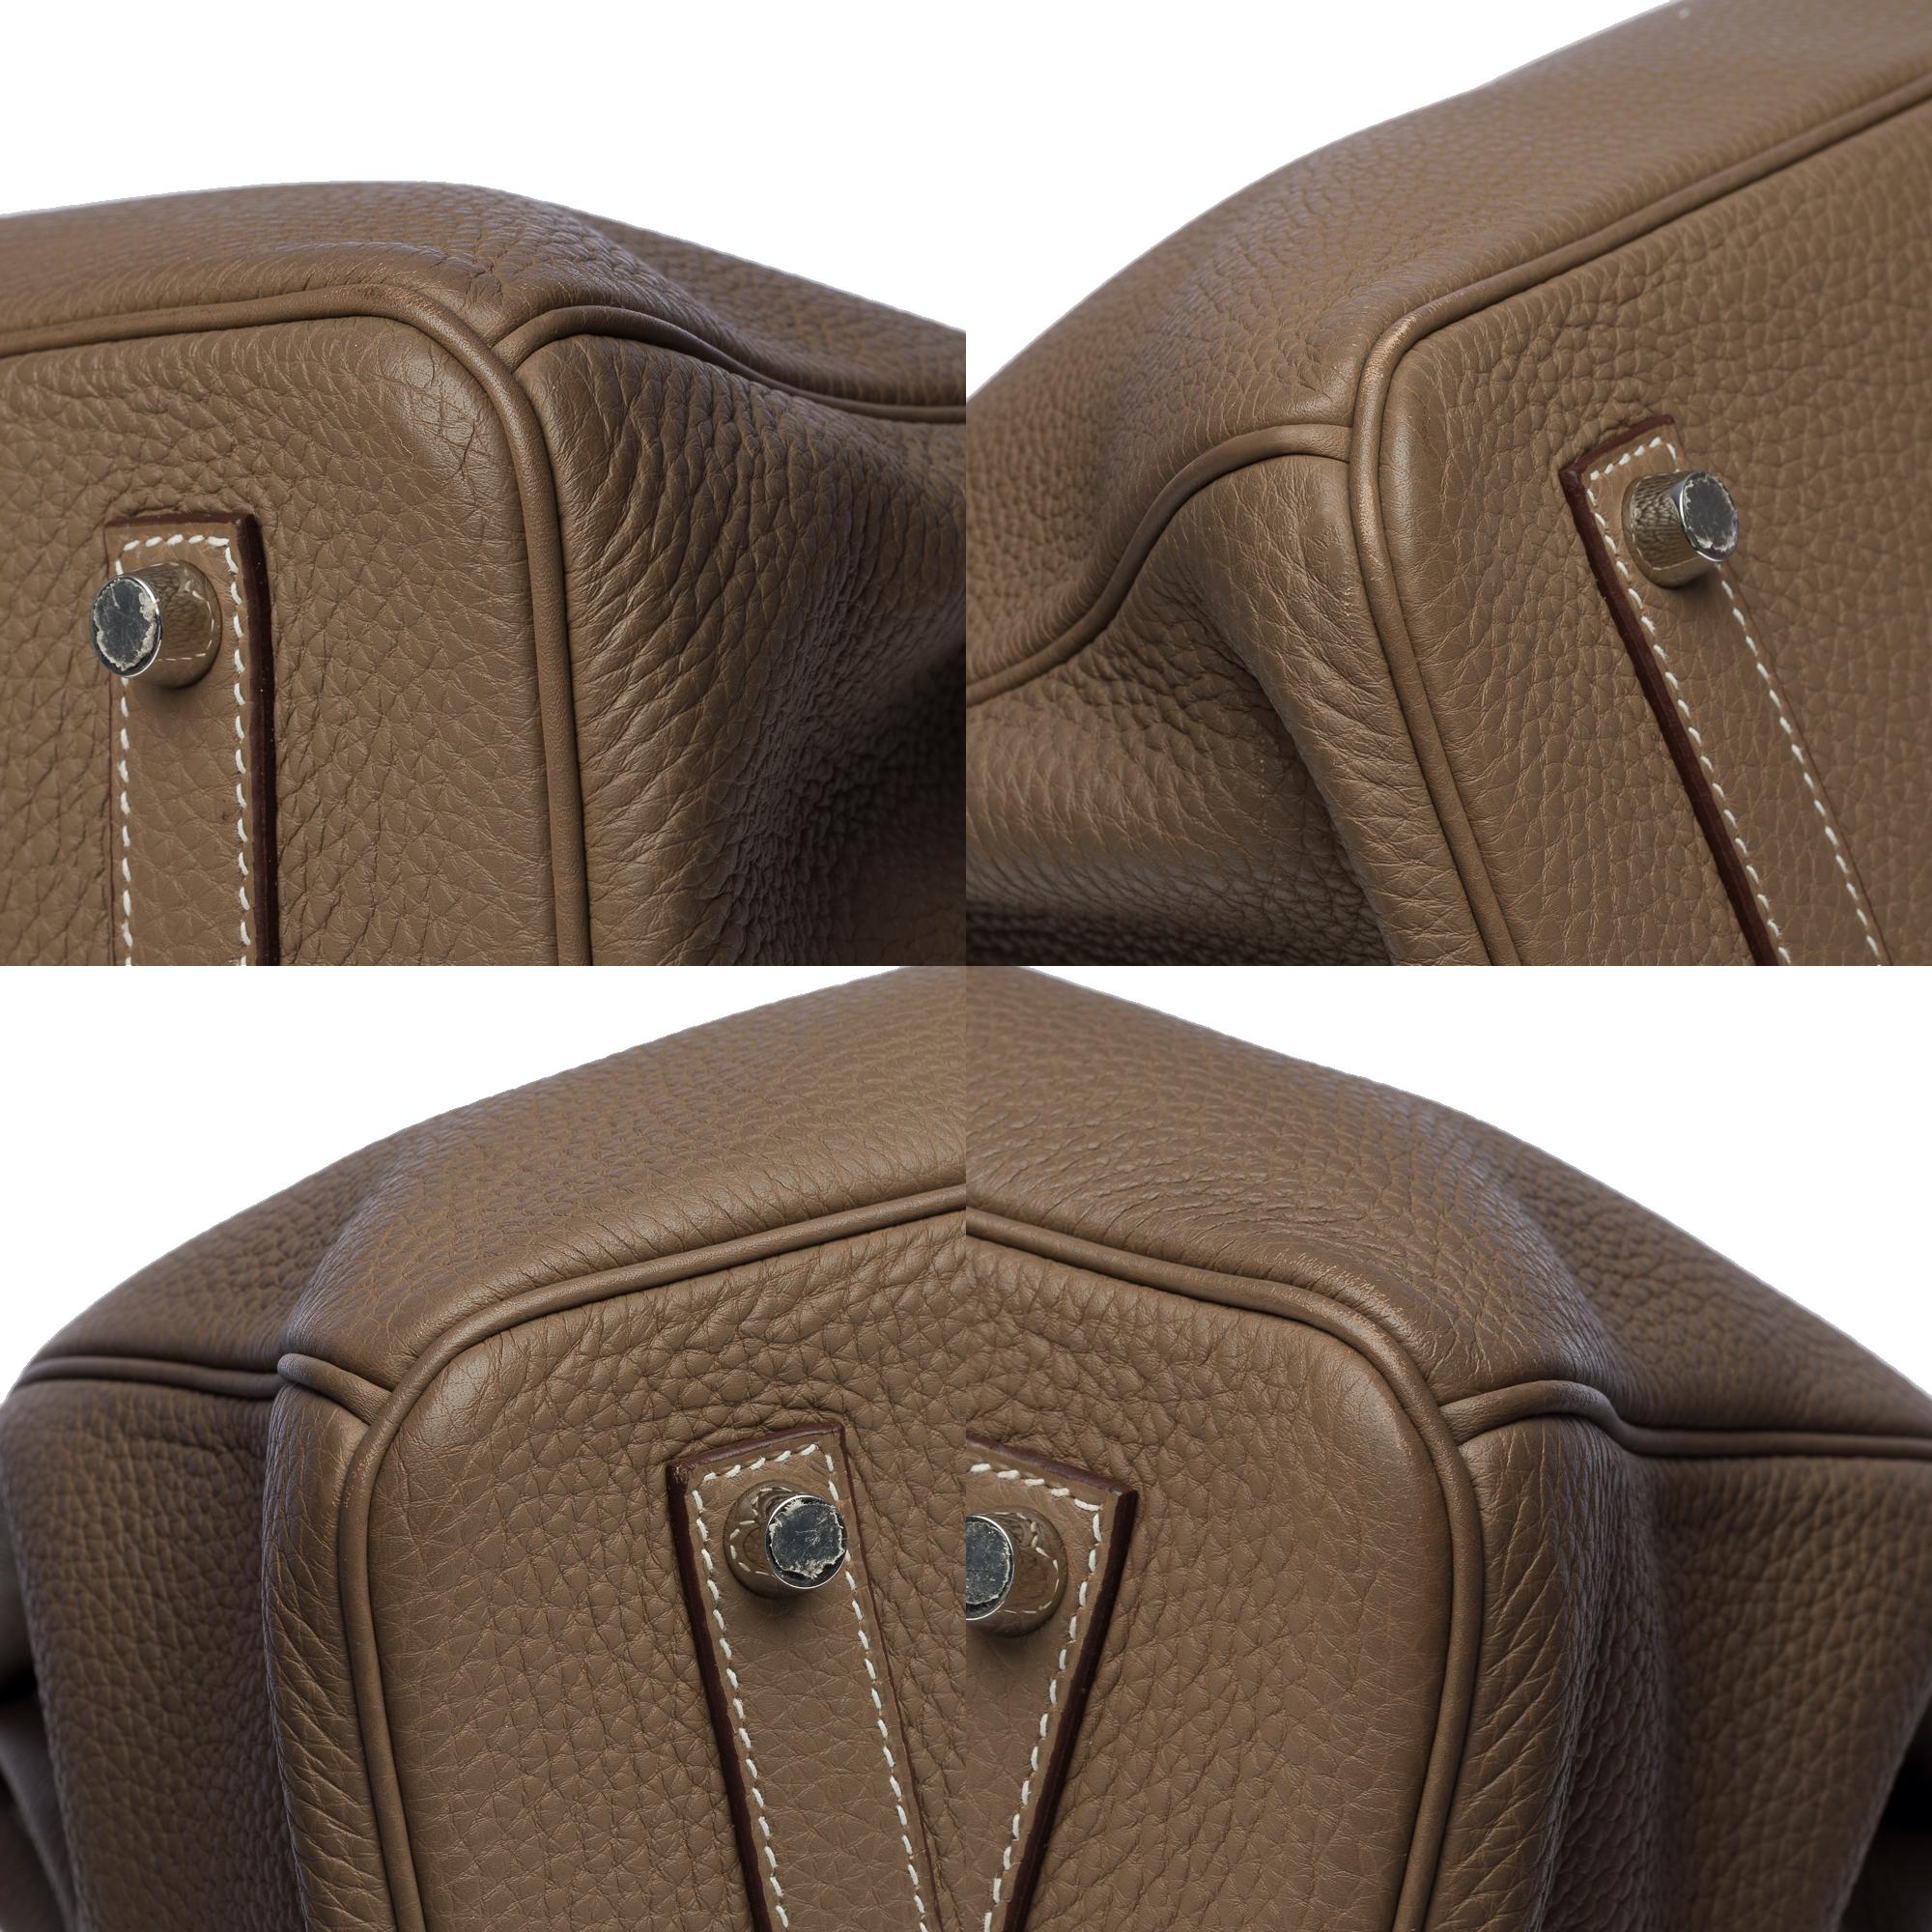 Stunning Hermès Birkin 35 handbag in étoupe Togo leather, SHW 3